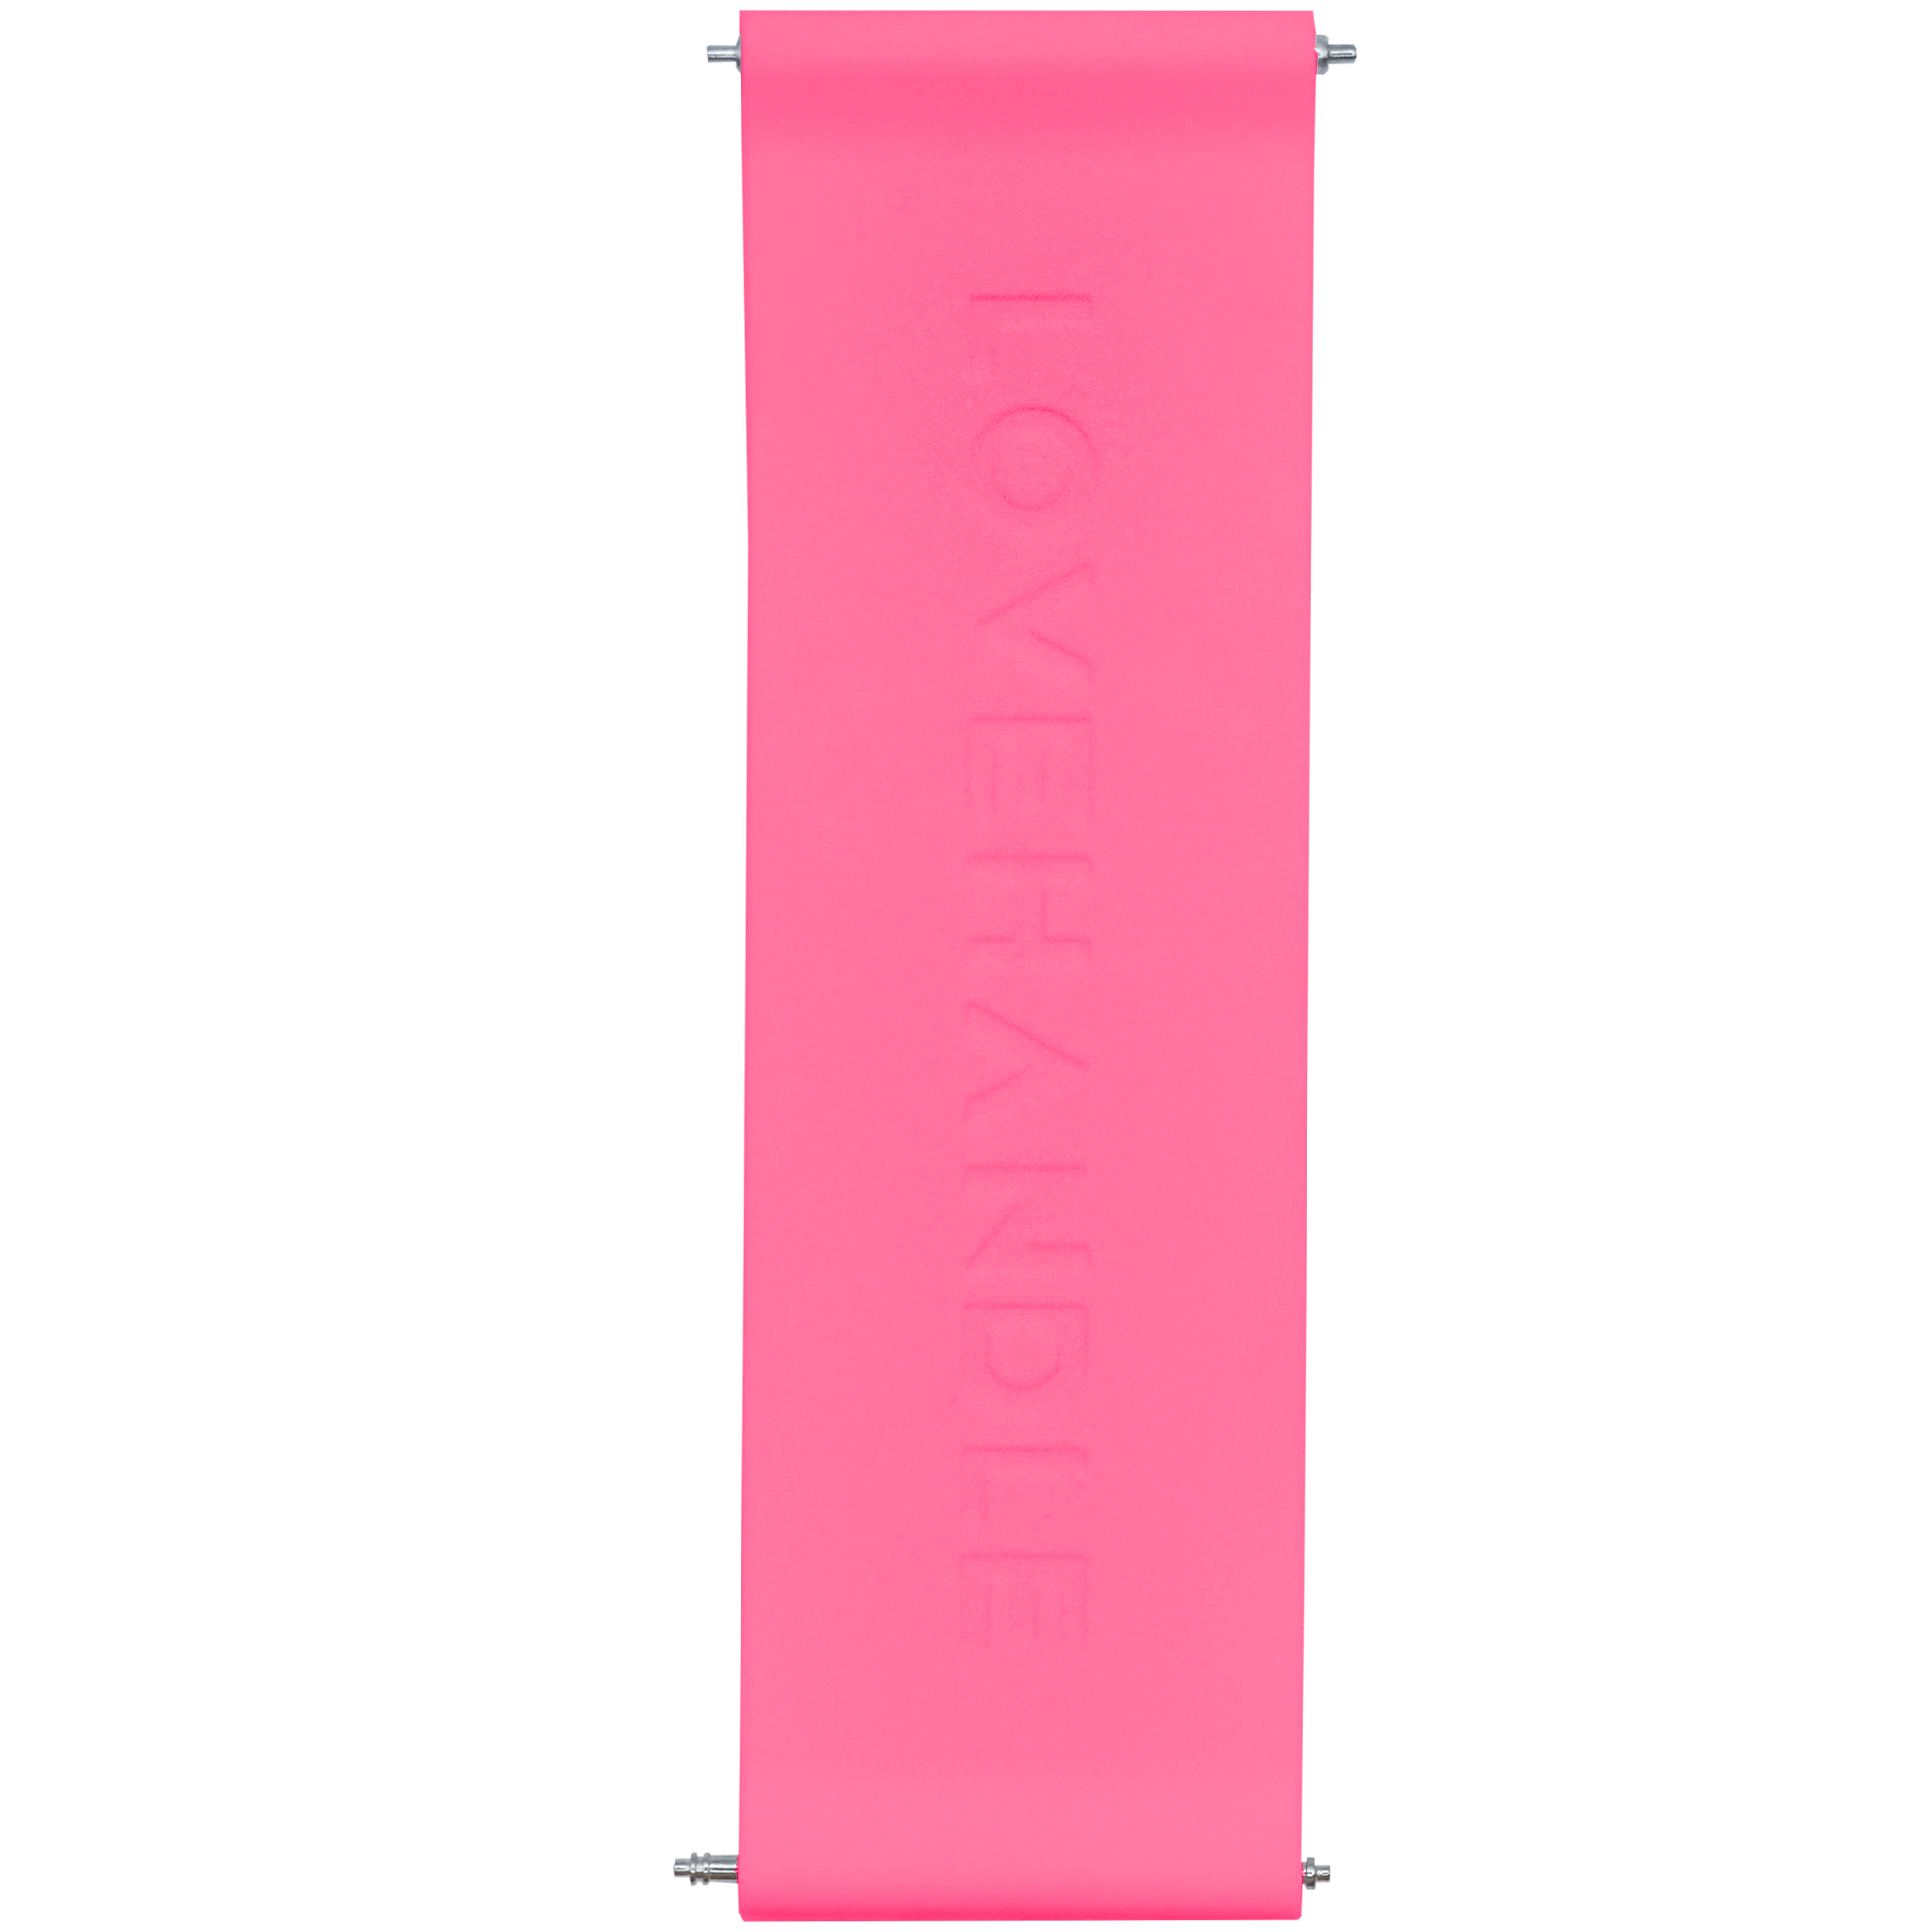 PRO Strap - Hot Pink